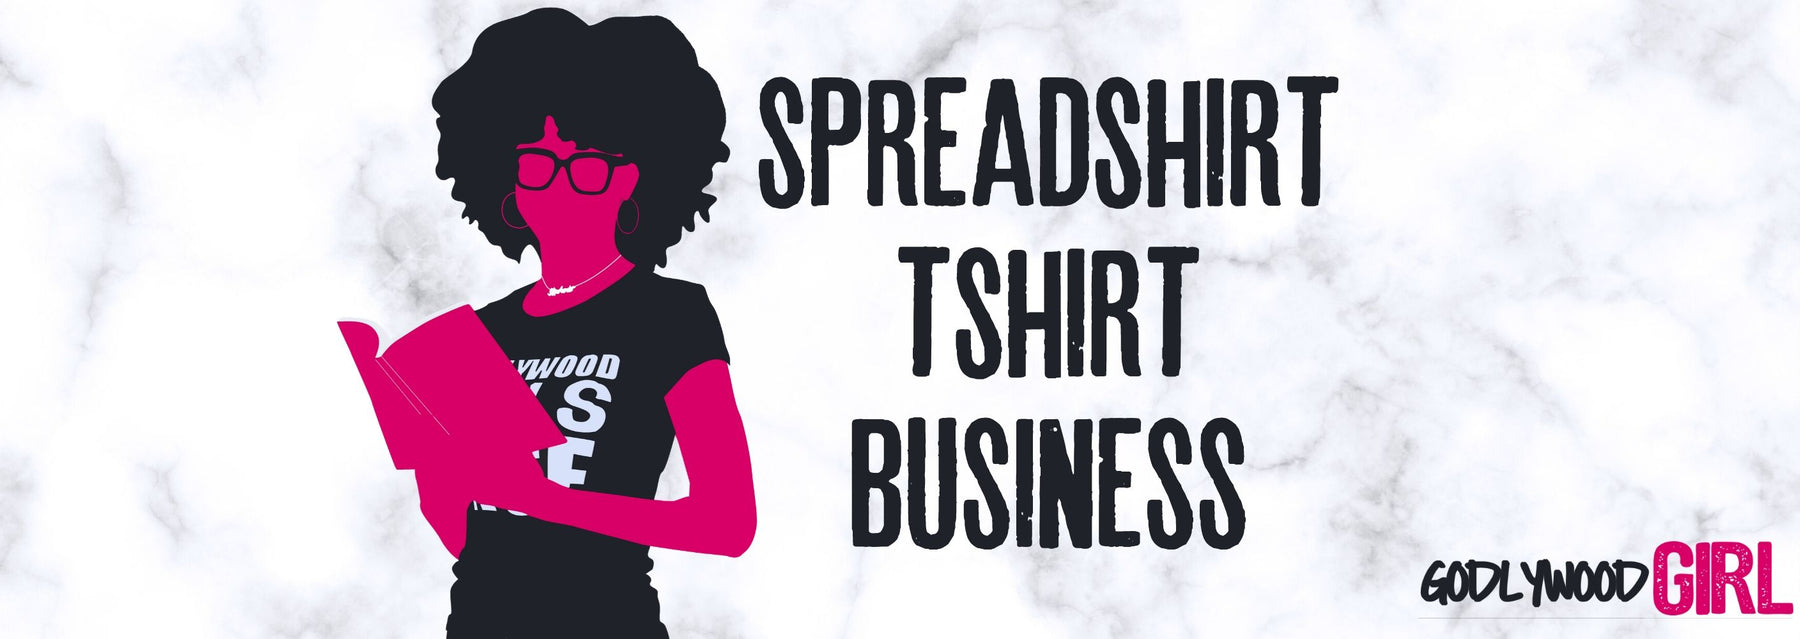 SPREADSHIRT (How To Start A Christian T-Shirt Business Using Spreadshirt.com)